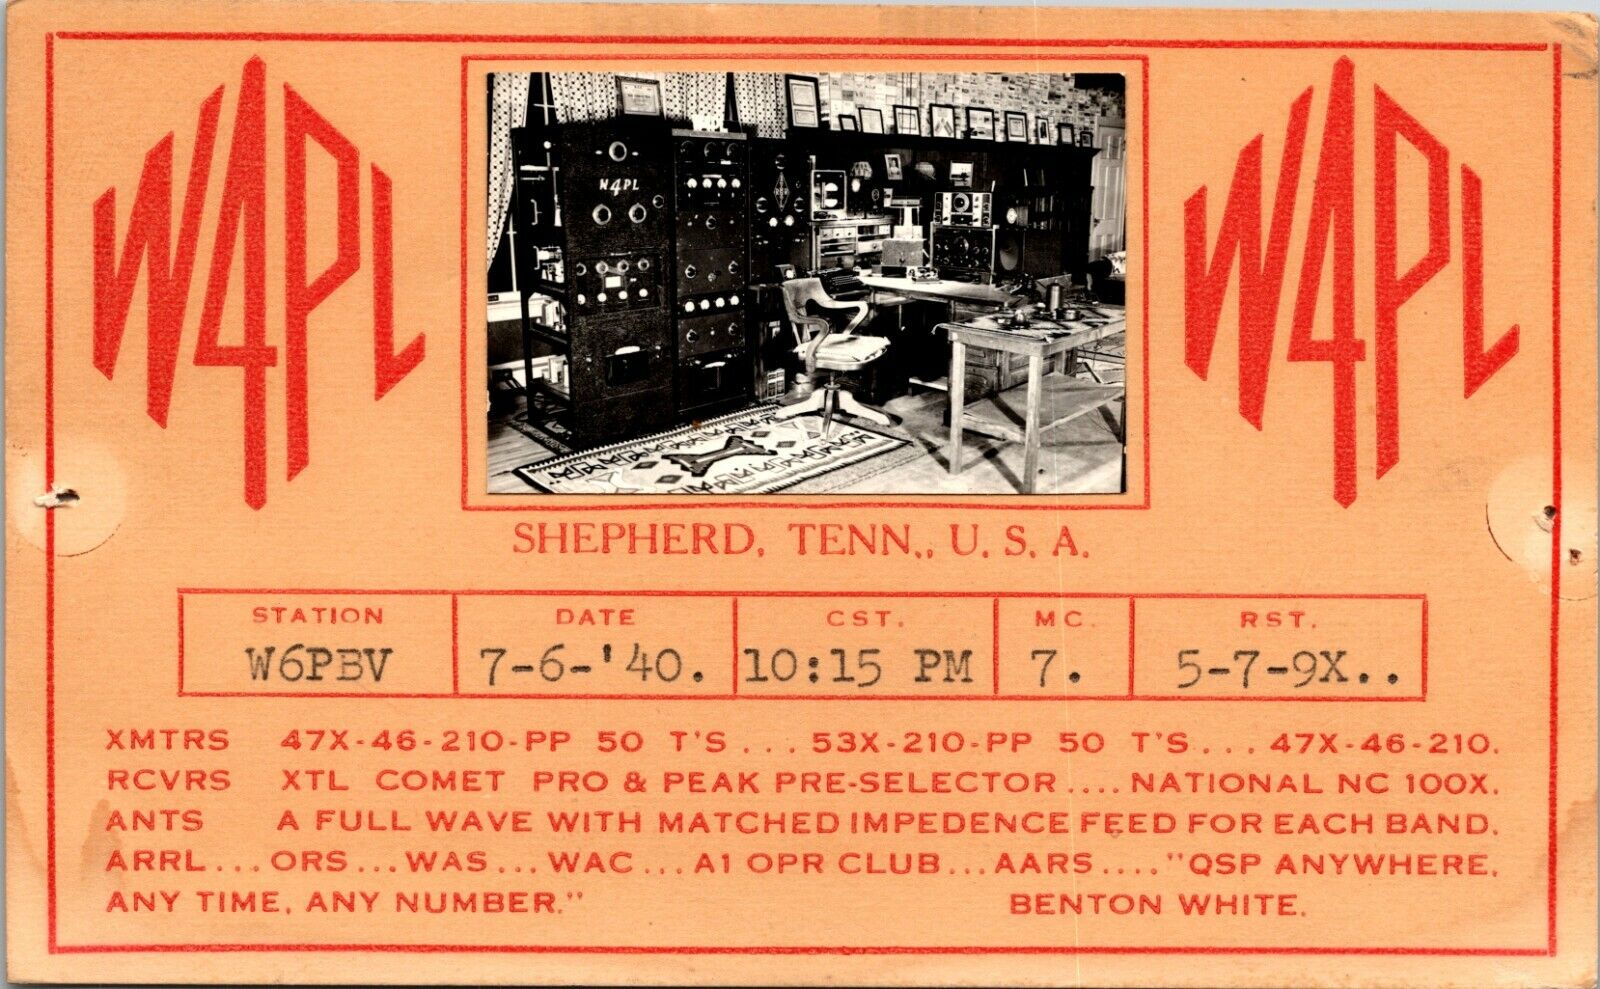 Vtg Ham Radio Cb Amateur Qsl Qso Card Postcard Shepherd Tennessee W4pl 1940